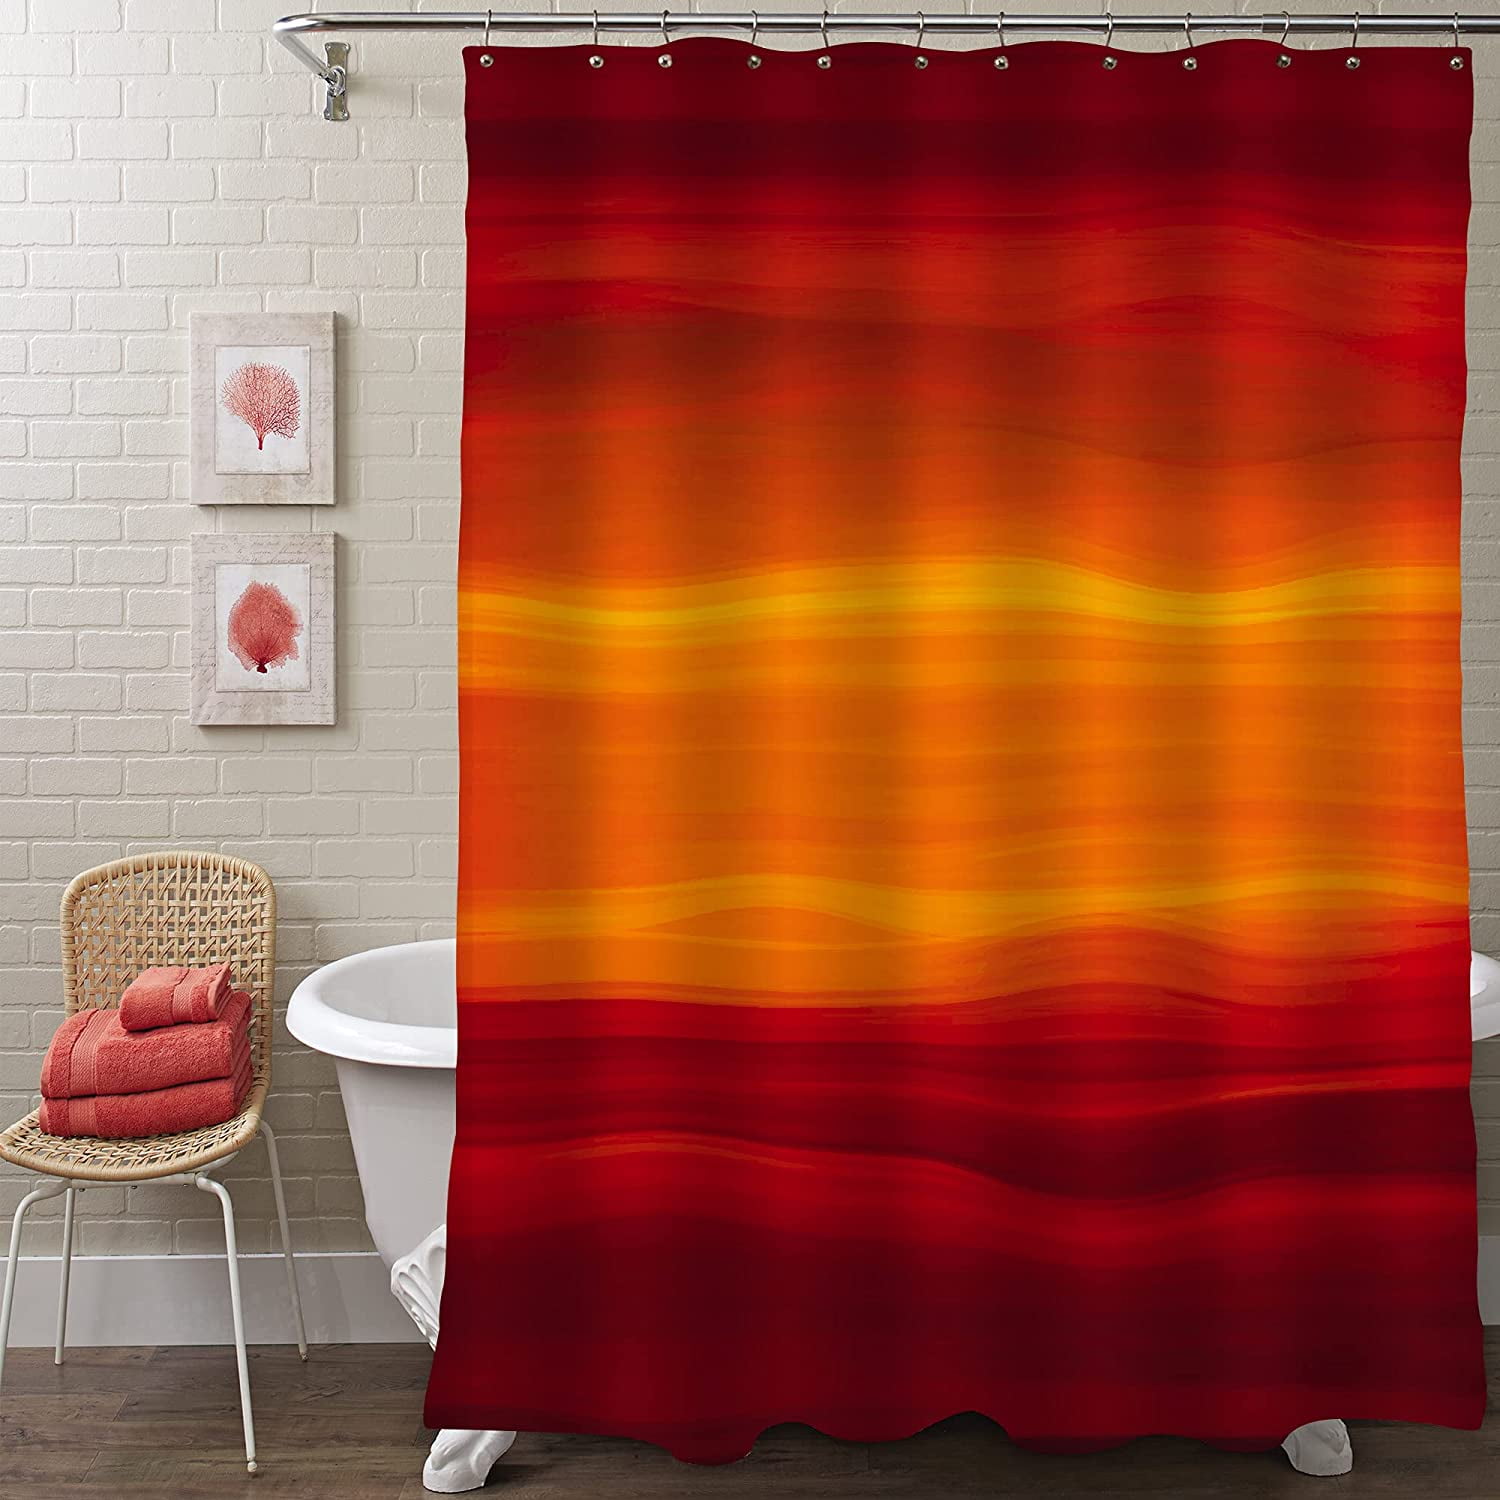 Ocean lighthouse Lodge Theme Bathroom Fabric Shower Curtain 84 Inches Extra Long 